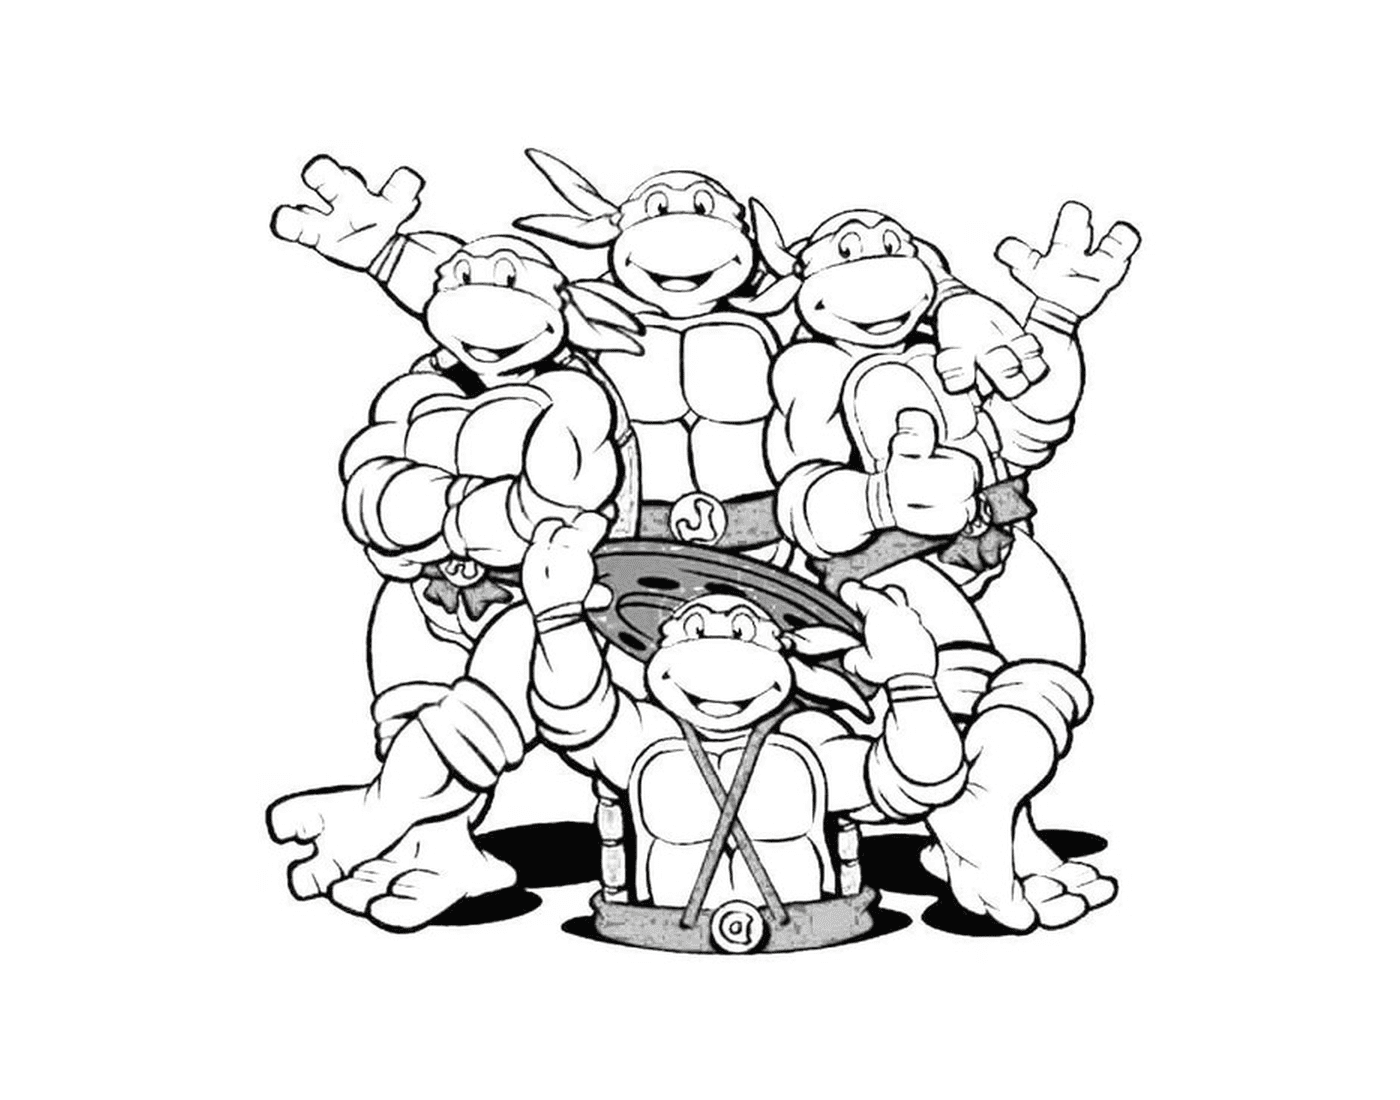  Equipe fantástica de tartarugas ninja 